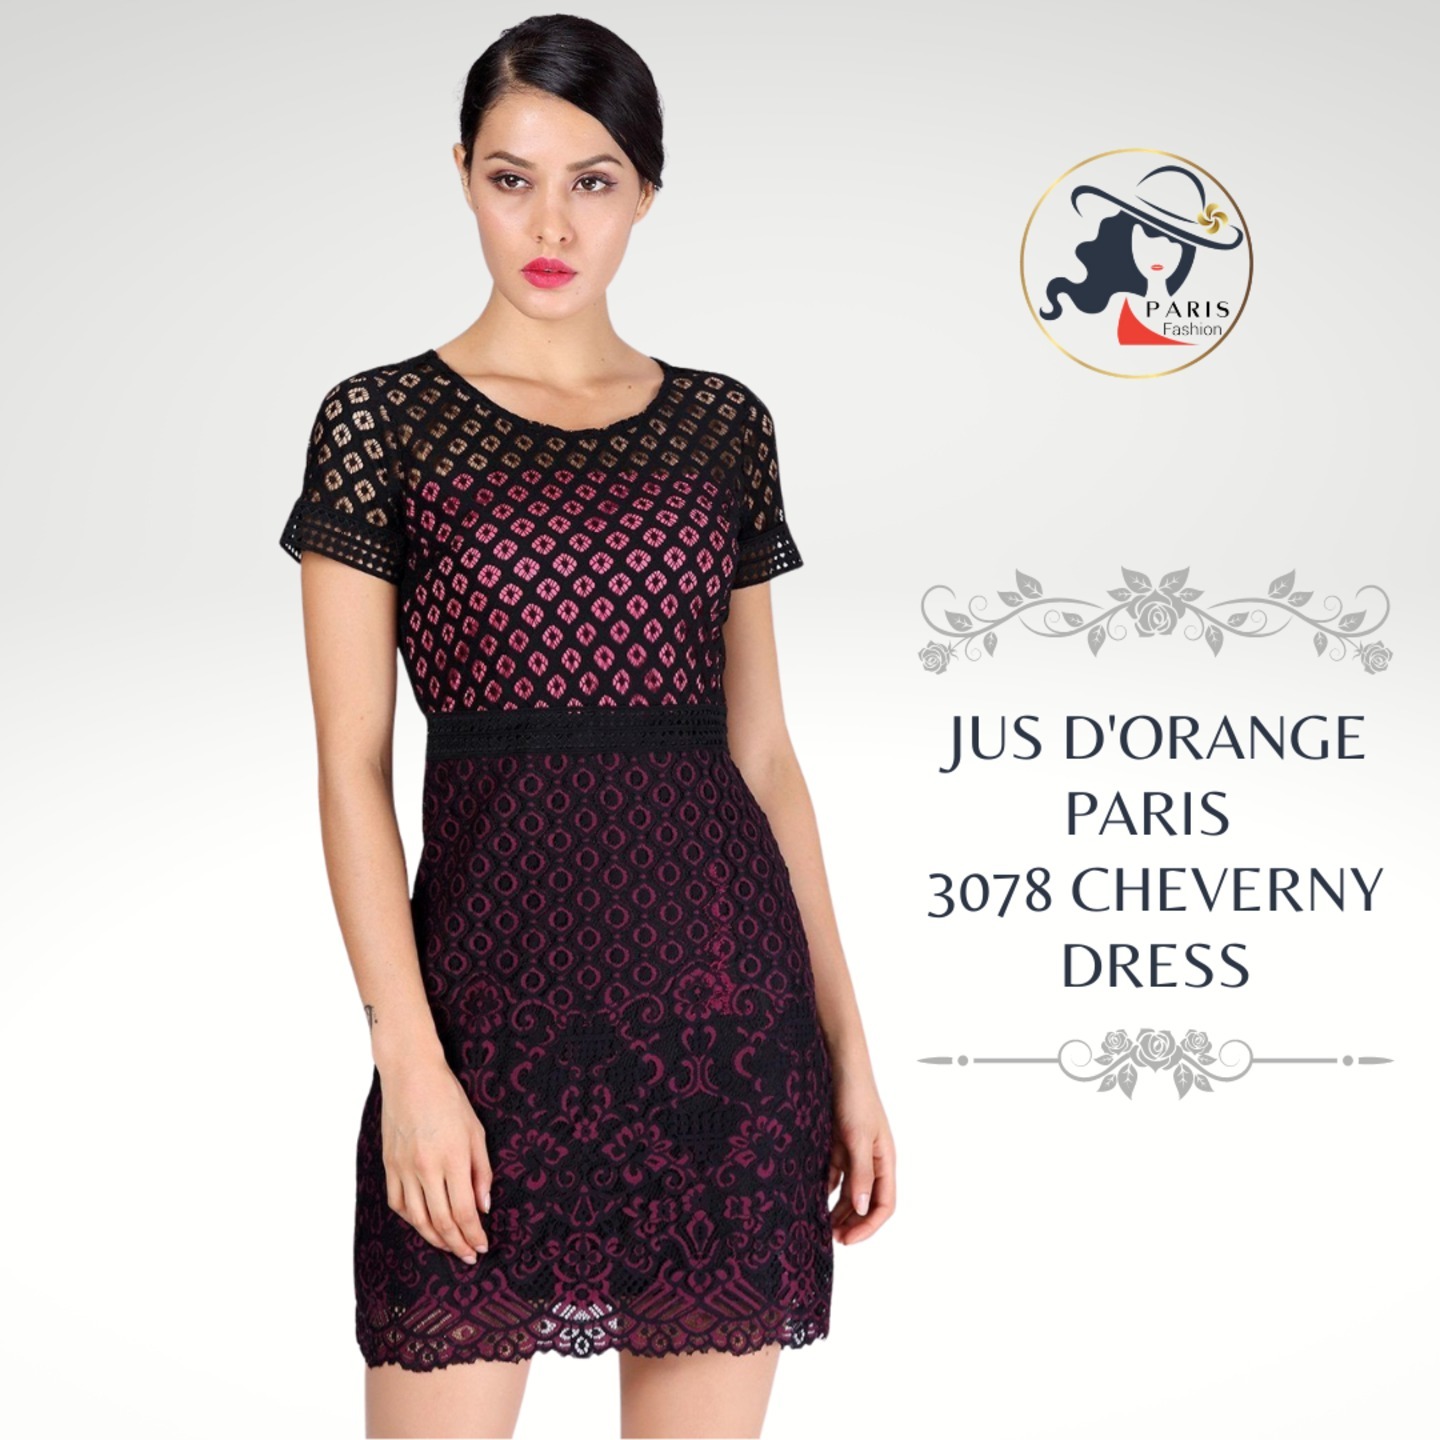 JUS D'ORANGE PARIS 3078 CHEVERNY DRESS